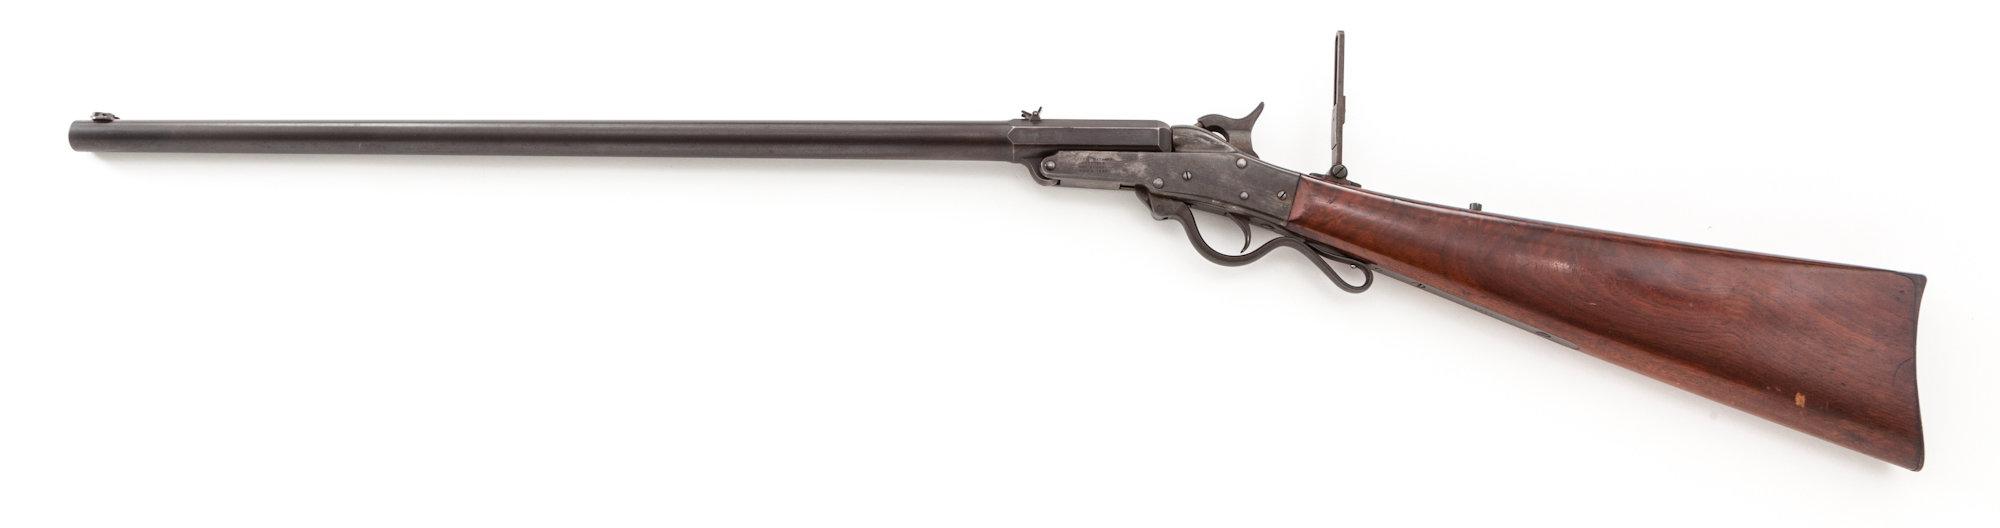 Maynard Model 1865 Percussion Sporting Rifle